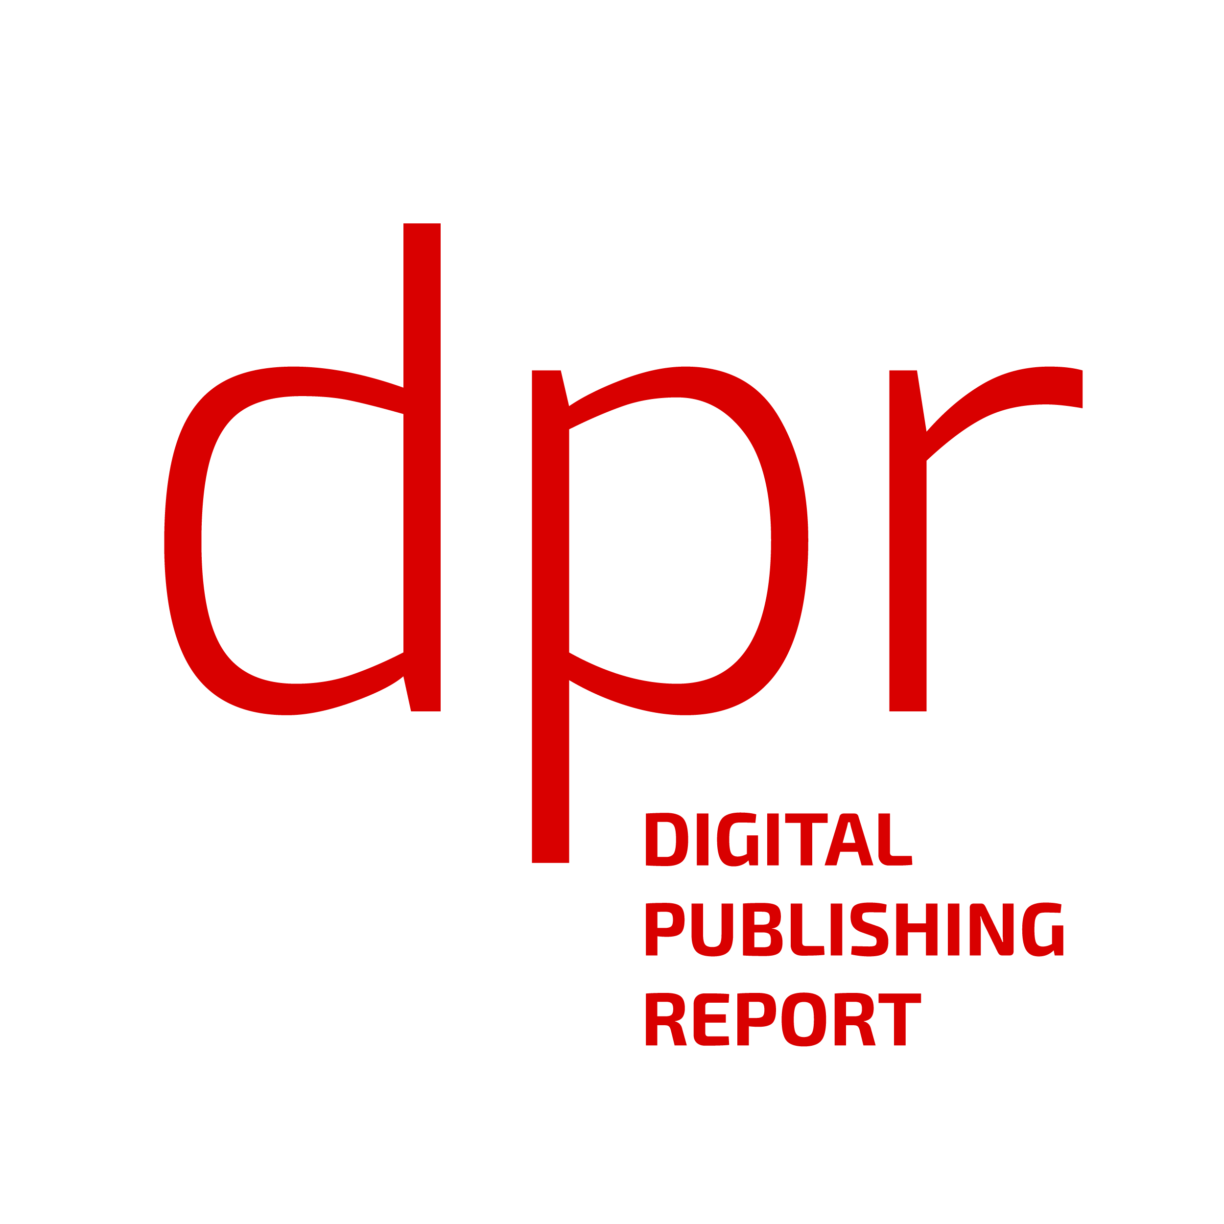 digital publishing report (dpr)